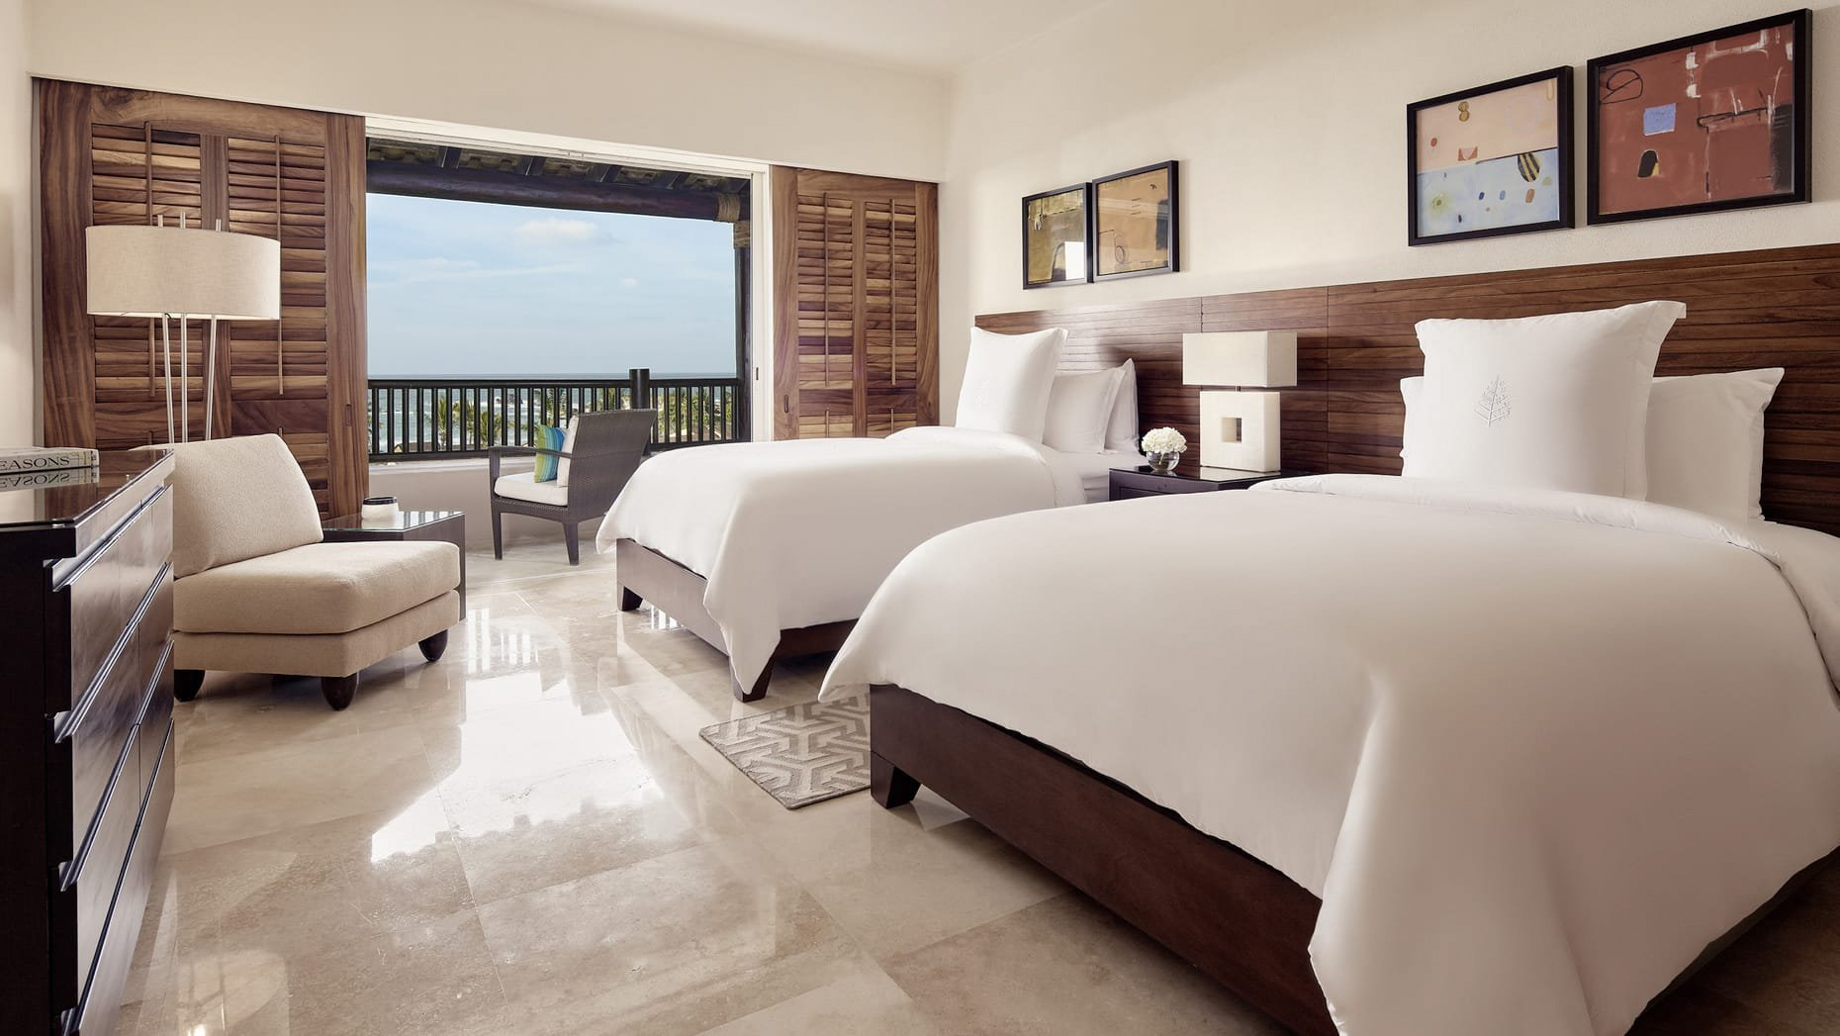 Four Seasons Resort Punta Mita - Nayarit, Mexico - Ocean View Penthouse Bedroom